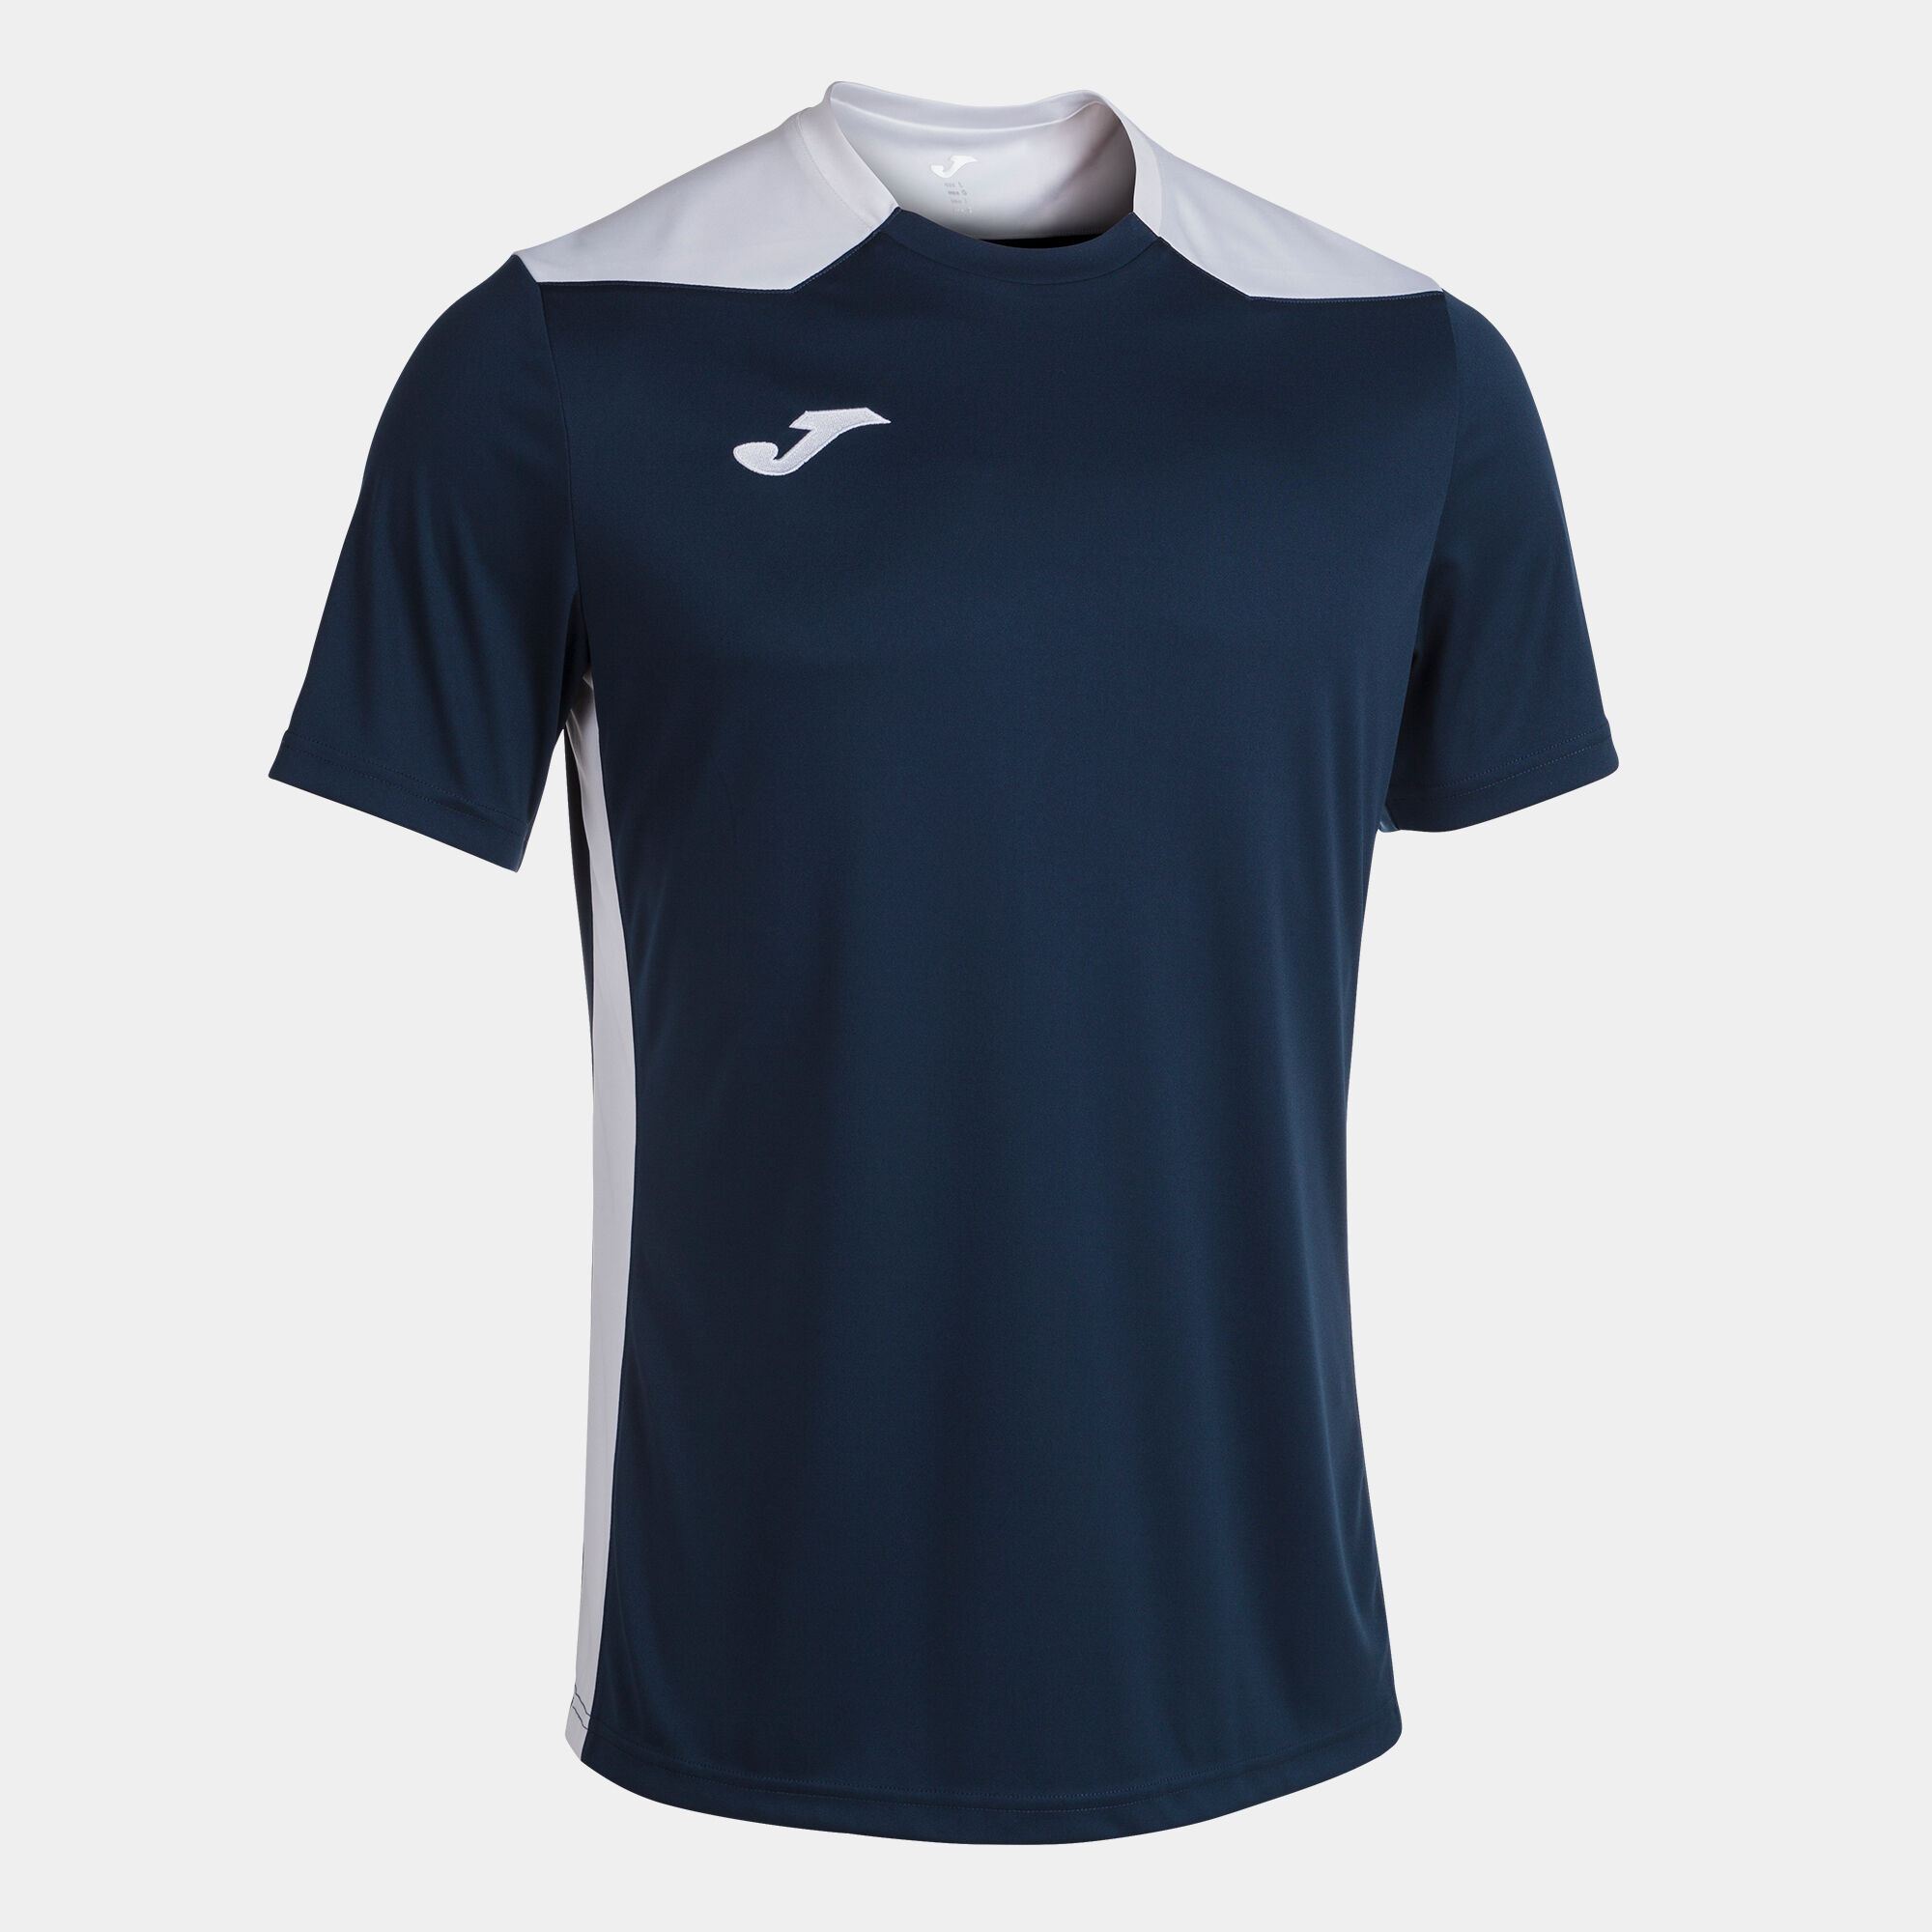 T-shirt manga curta homem Championship VI azul marinho branco